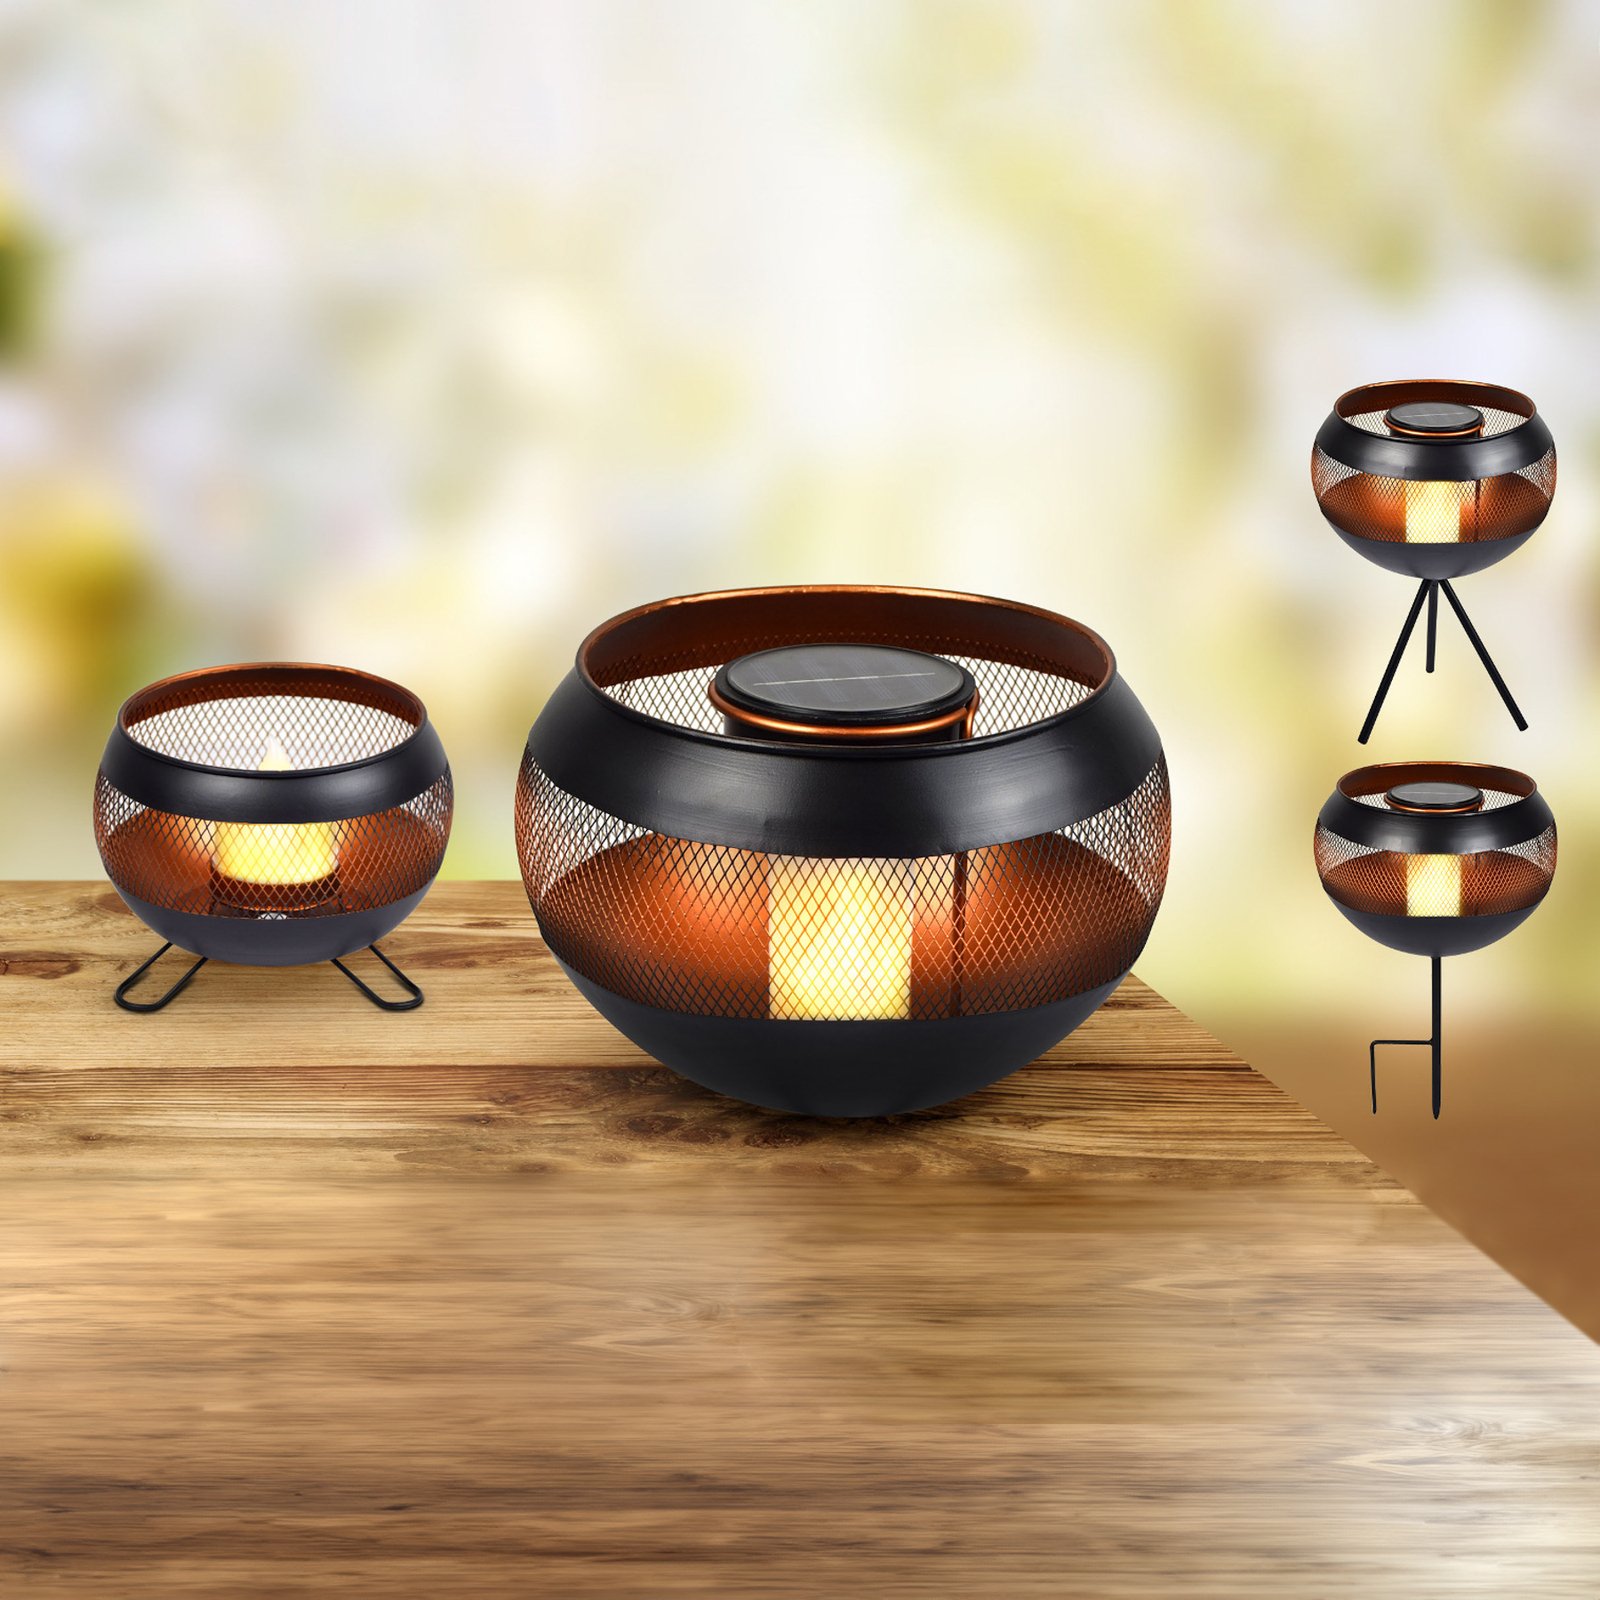 Solar decorative light in a fire bowl design, IP44